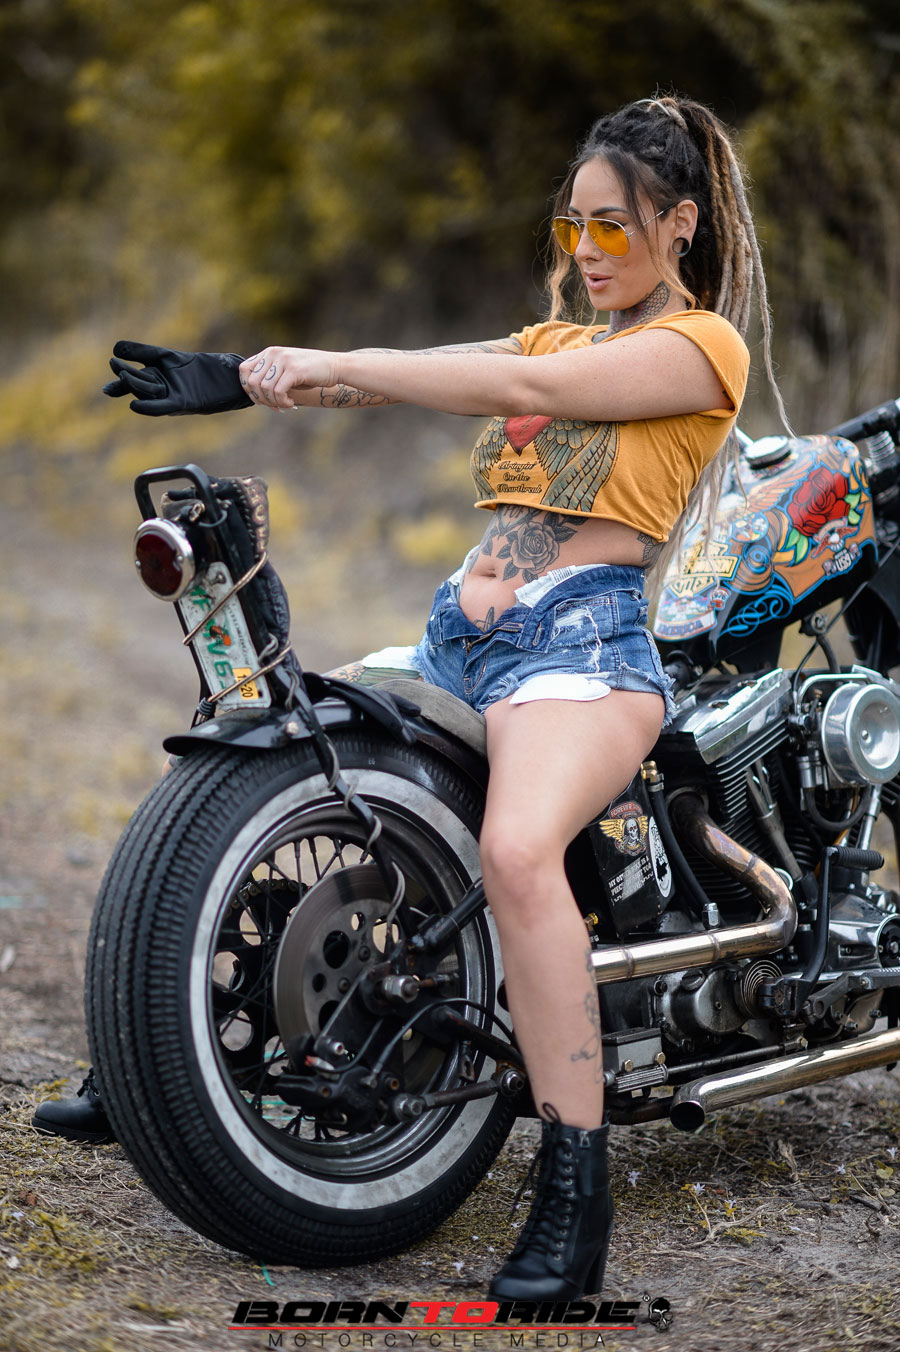 Biker Babe Velvet Queen 35 Born To Ride Motorcycle Magazine Motorcycle Tv Radio Events 9827